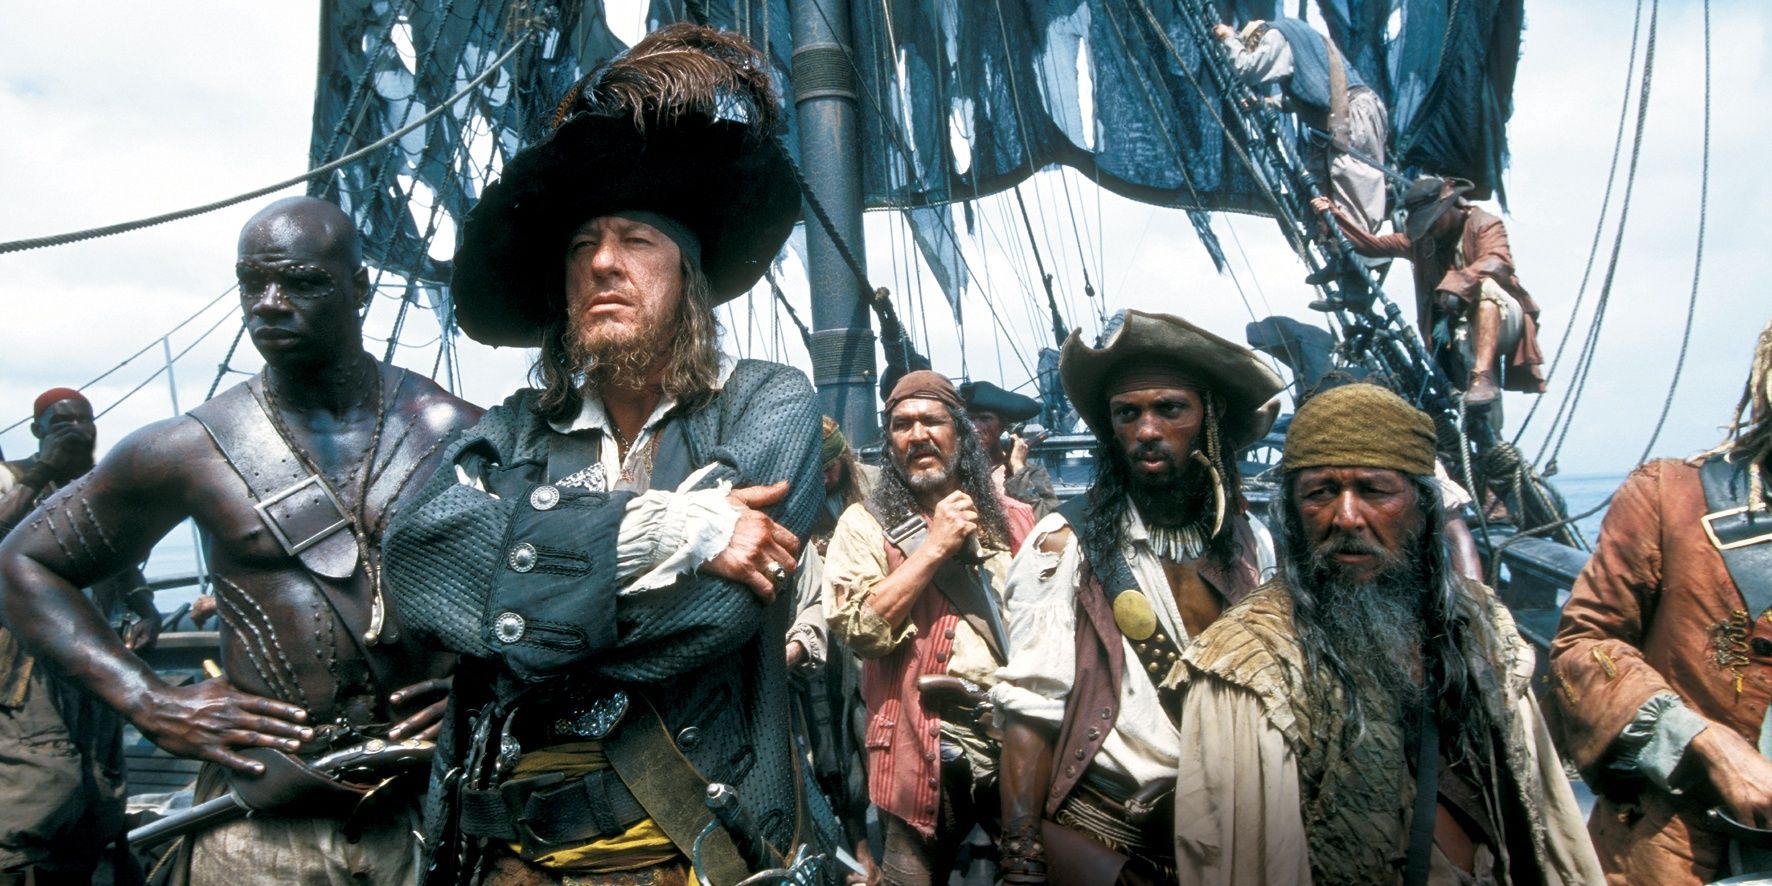 Captain Barbossa and crew in Pirates of the Caribbean